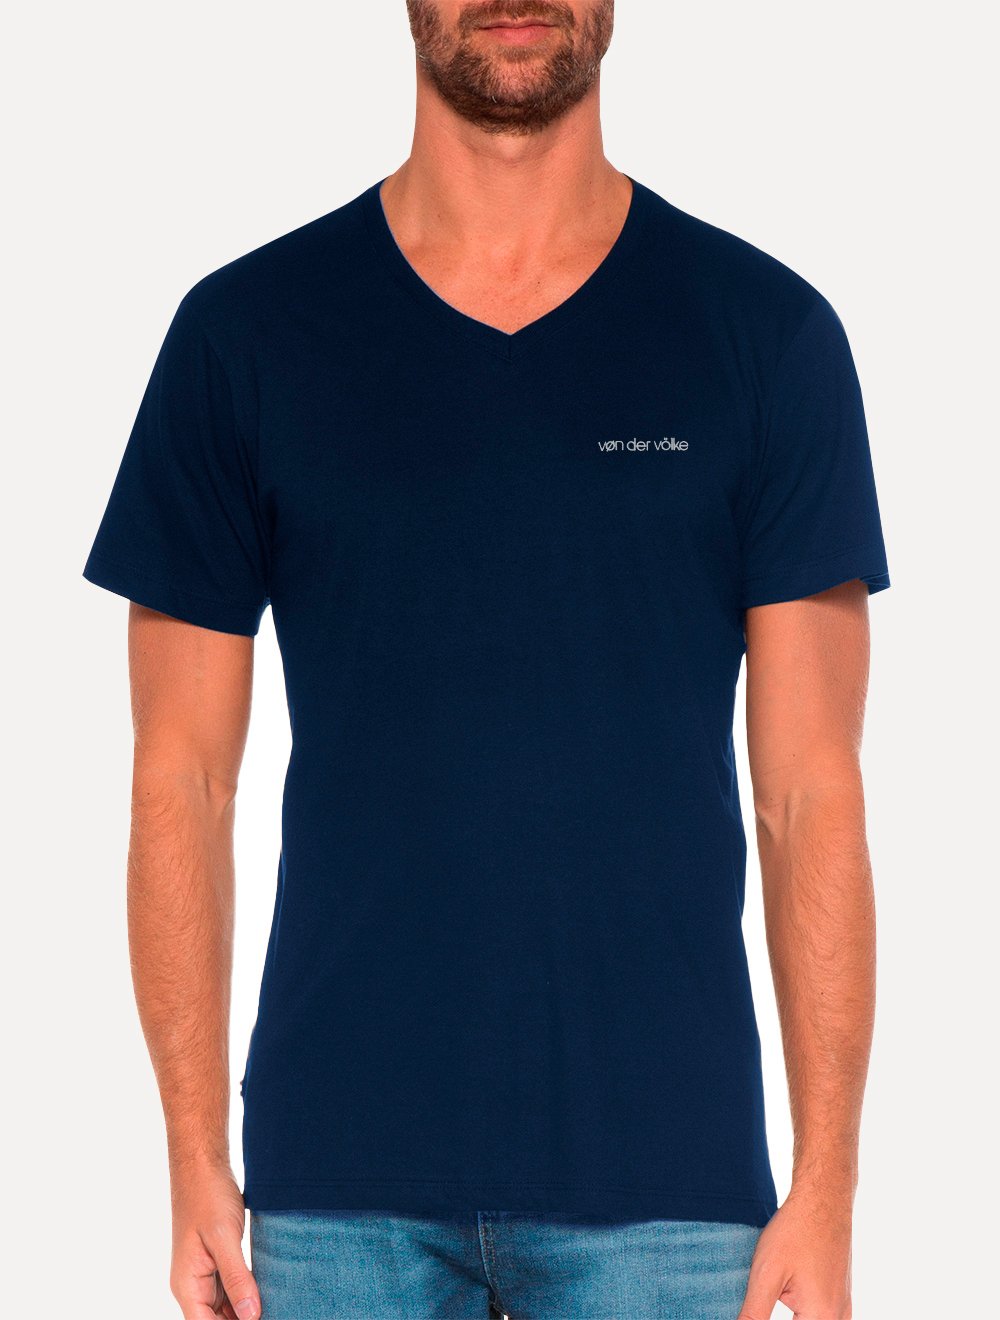 Camiseta Von der Volke Masculina Origineel V-Neck Basis Logo Azul Marinho